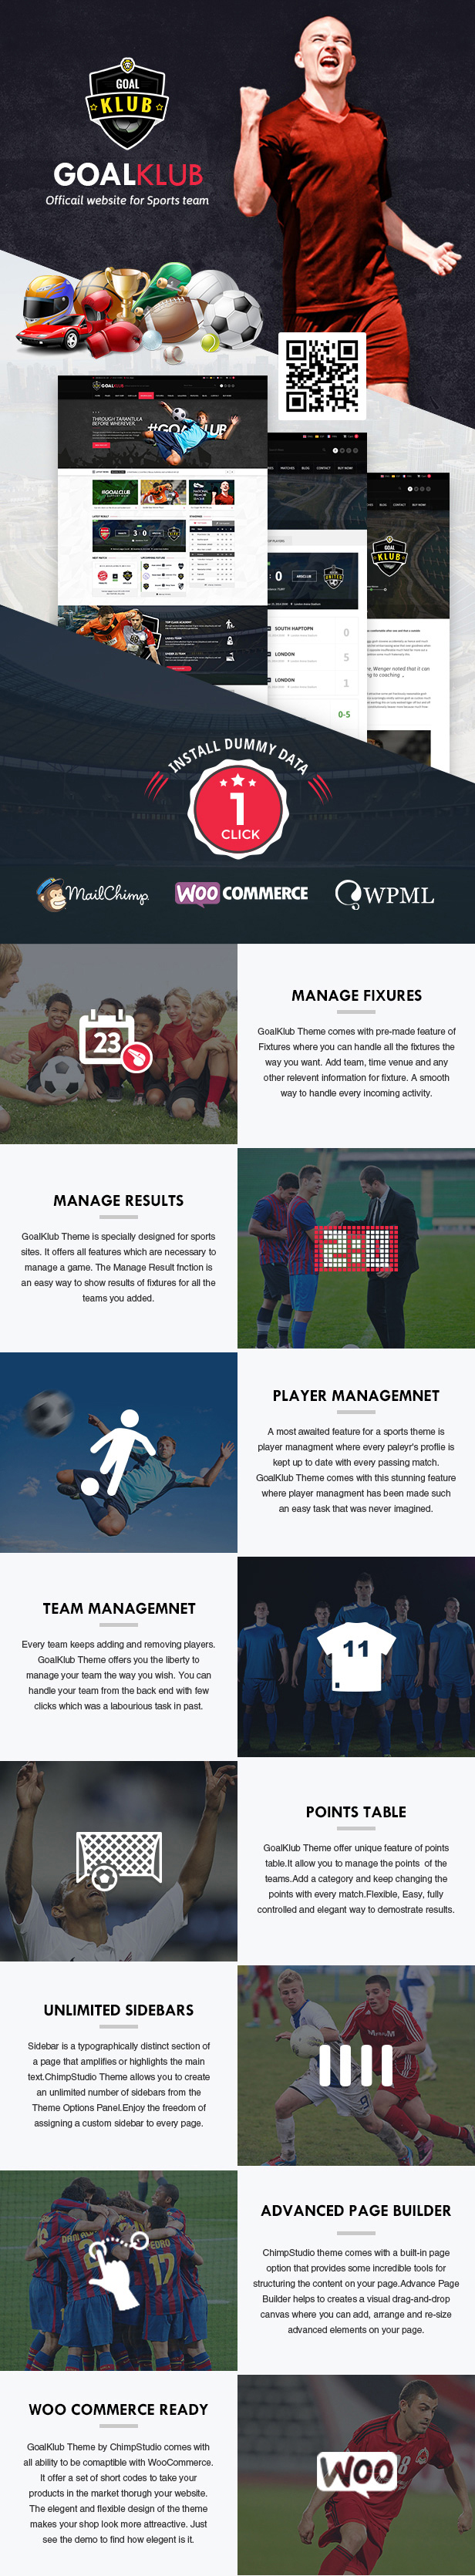 Goal Club | Sports & Events WordPress Theme - 1